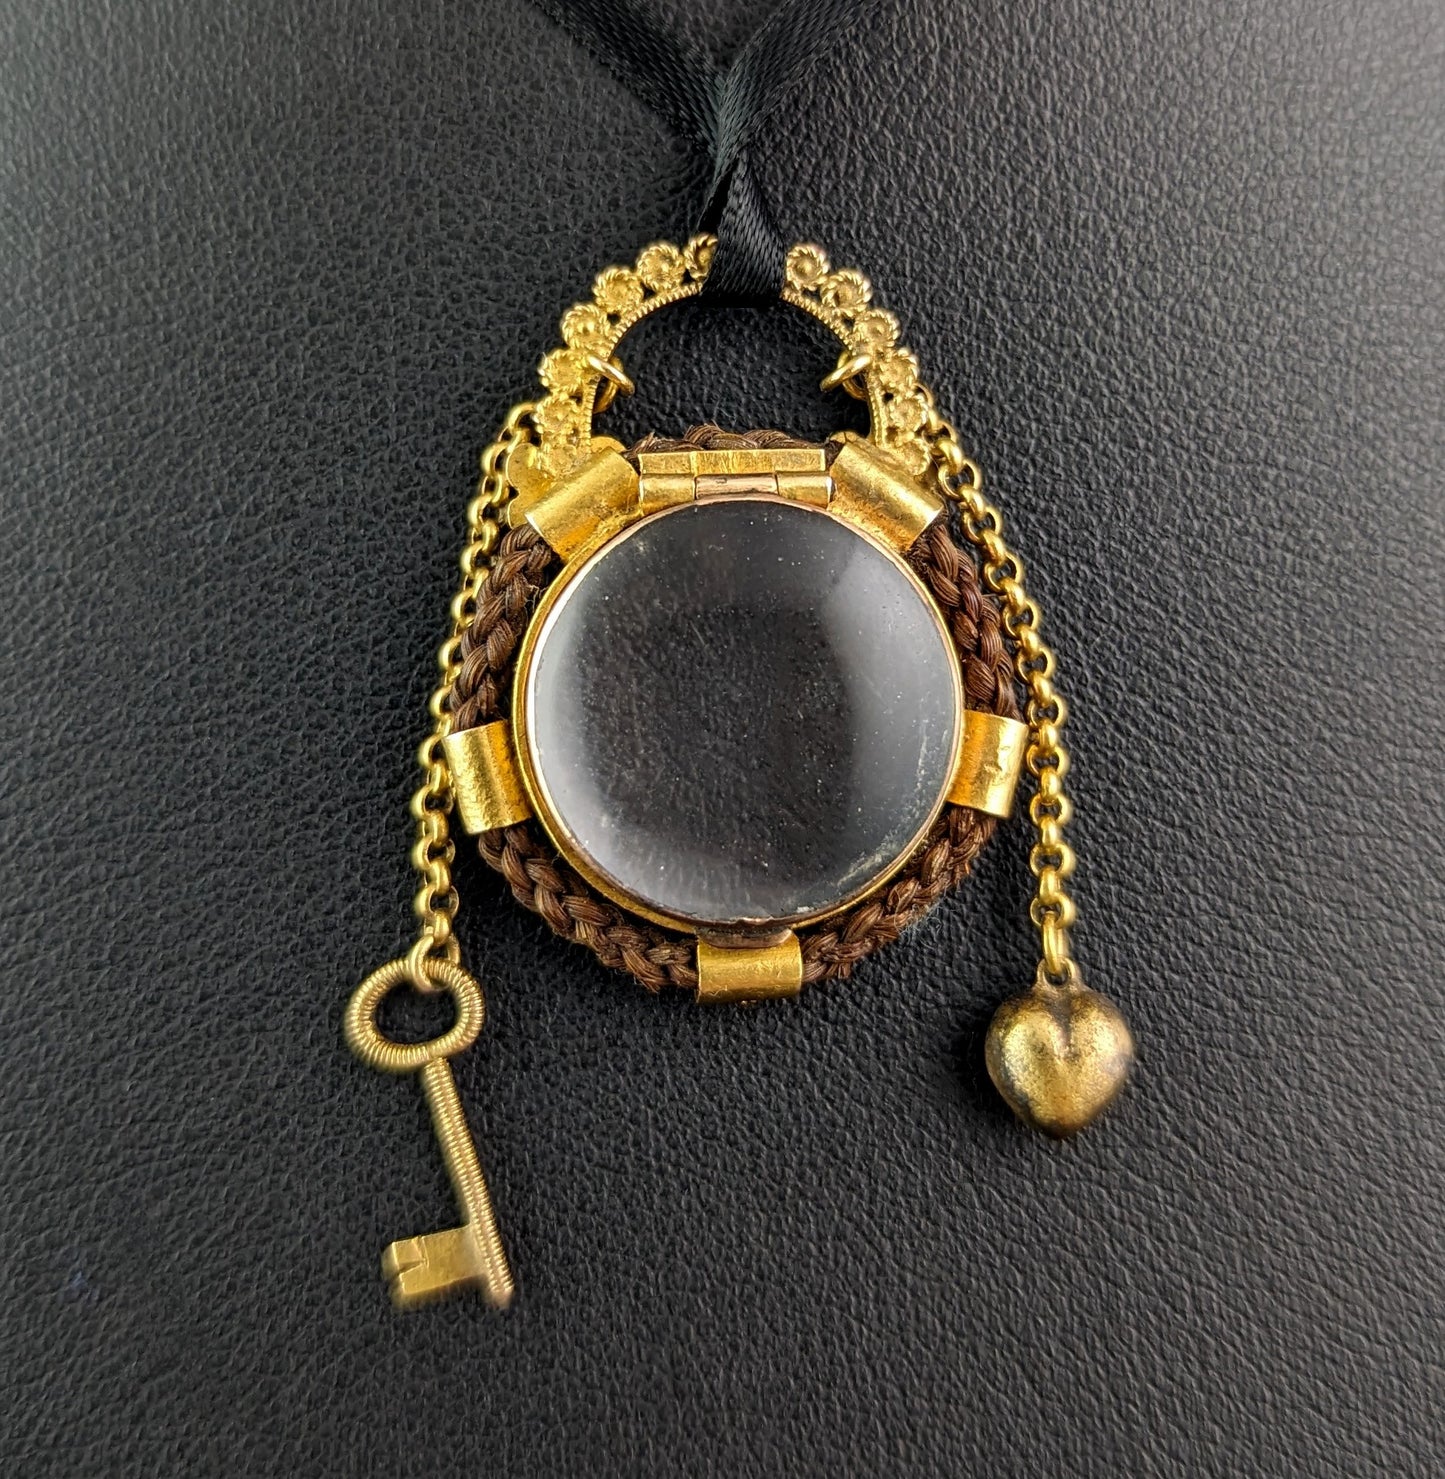 Antique Georgian Key to my Heart mourning locket, 18ct gold and Hairwork, Padlock